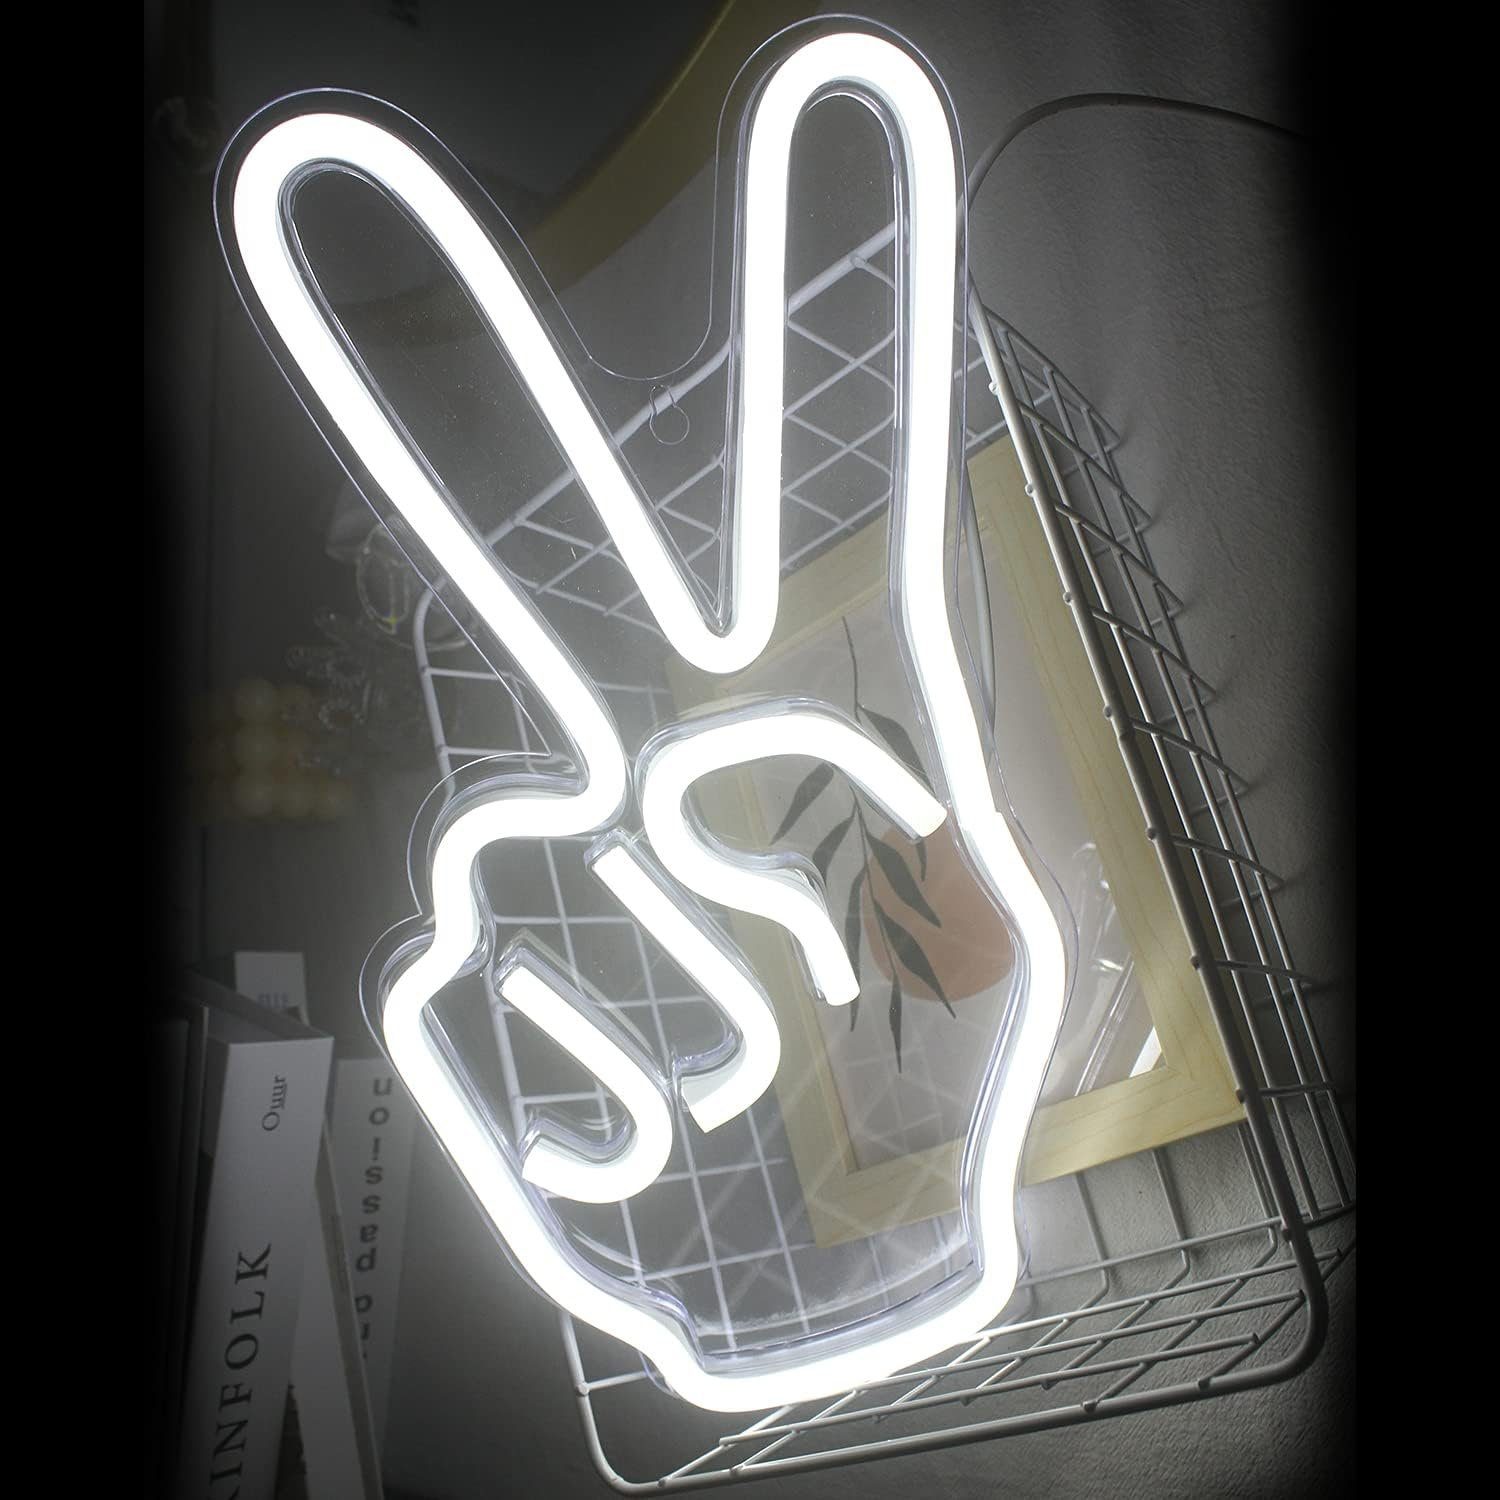 Neon Gesture Wandschild LED Stirnlampe Sign LED Licht zggzerg Wandleuchten Victory Peace (1-St)